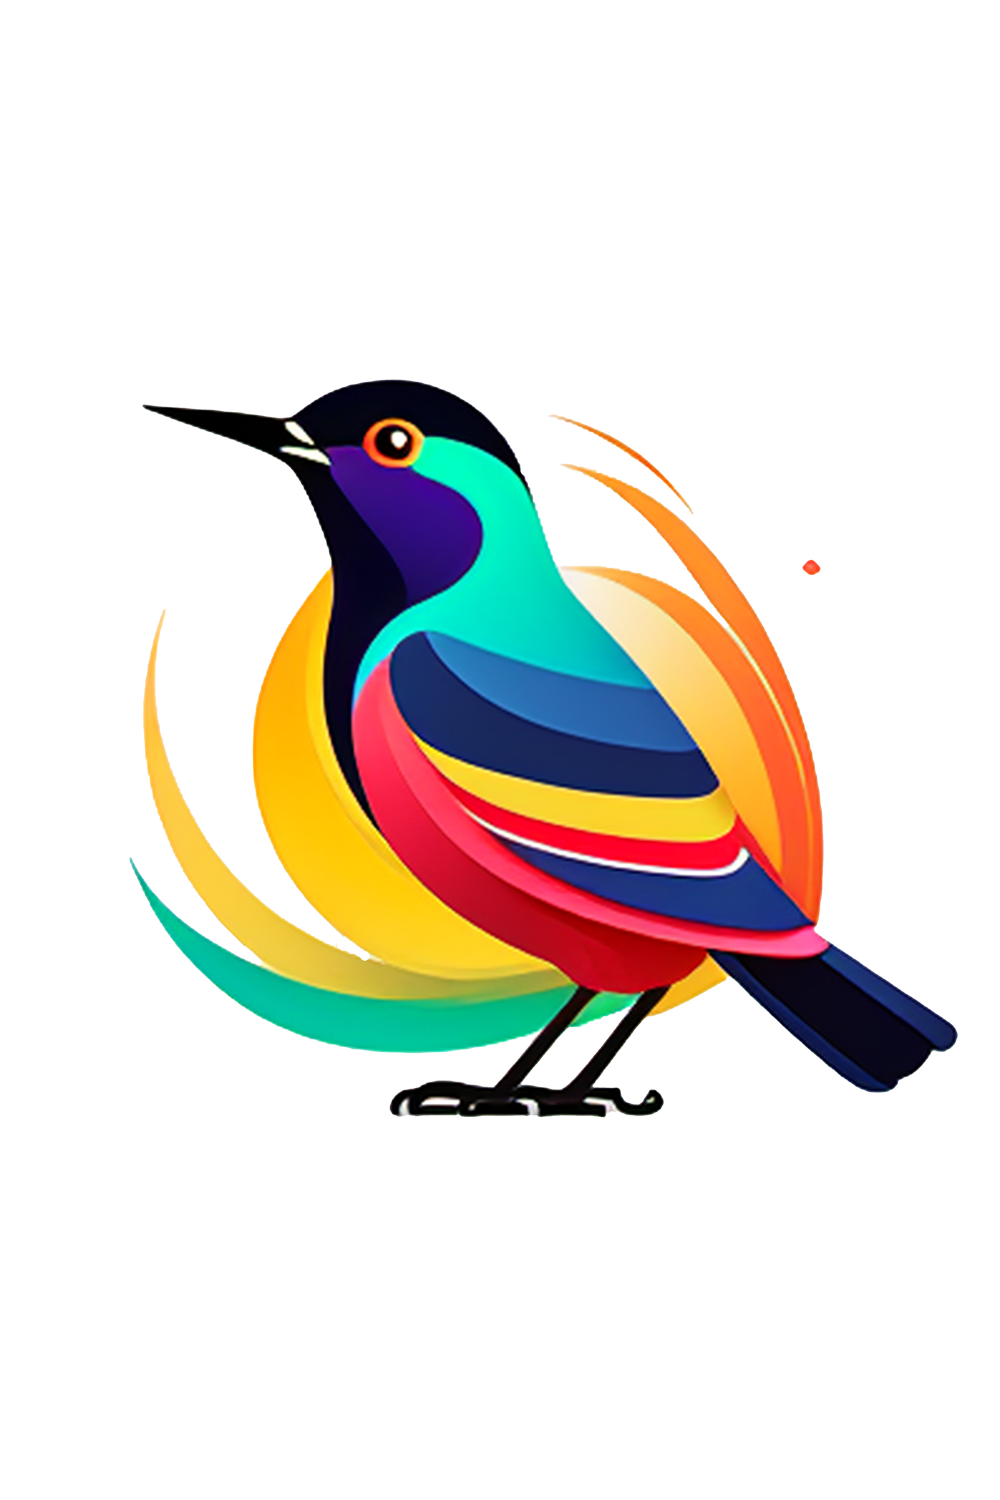 Bird logo design vector illustration  Beautiful multi colored bird pinterest preview image.